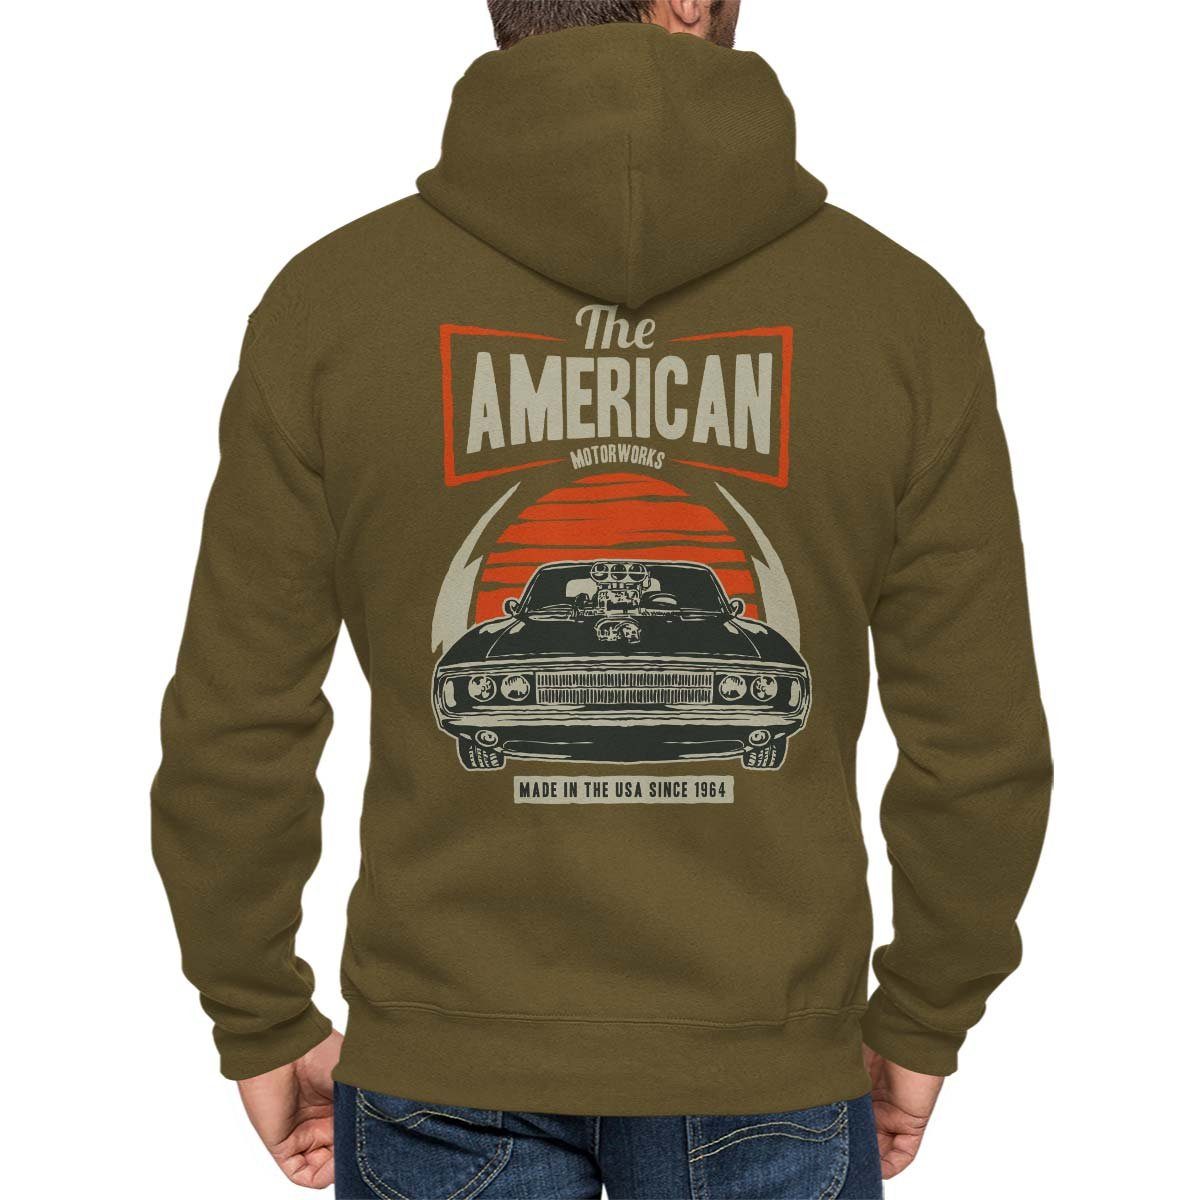 American Hoodie Auto Kapuzensweatjacke mit US-Car / Wheels Rebel On Kapuzenjacke Motiv Khaki The Zip